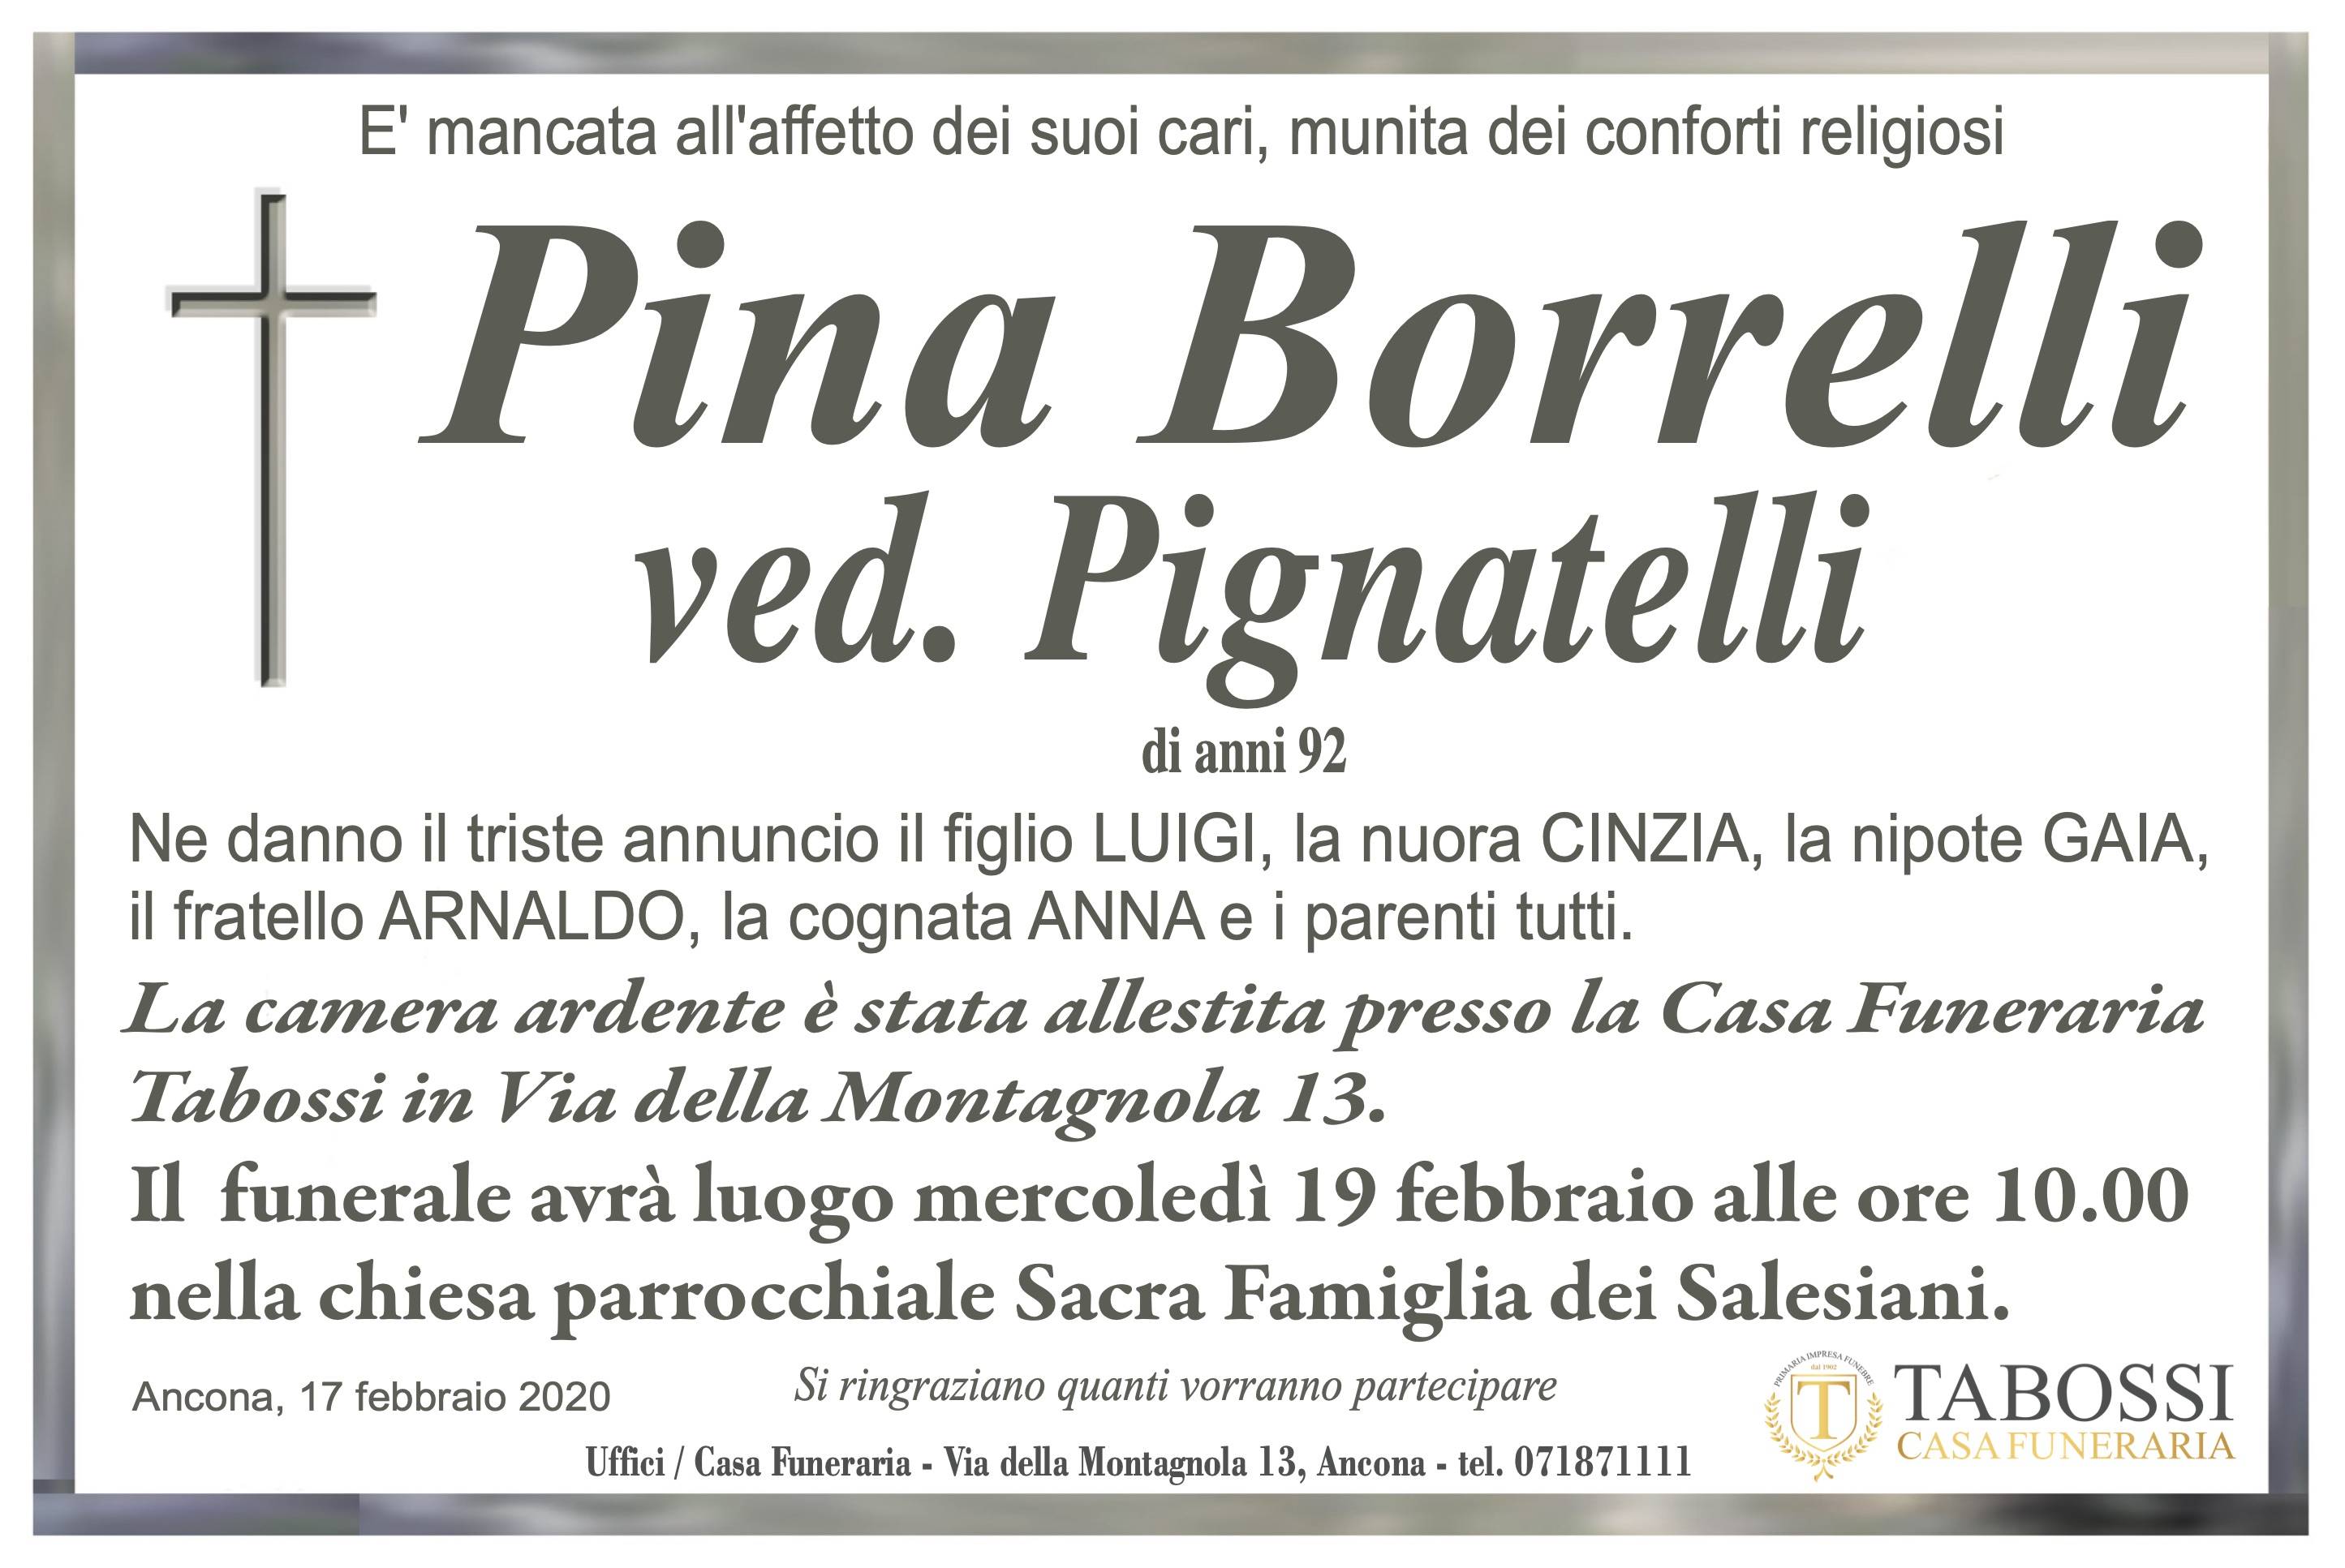 Pina Borrelli